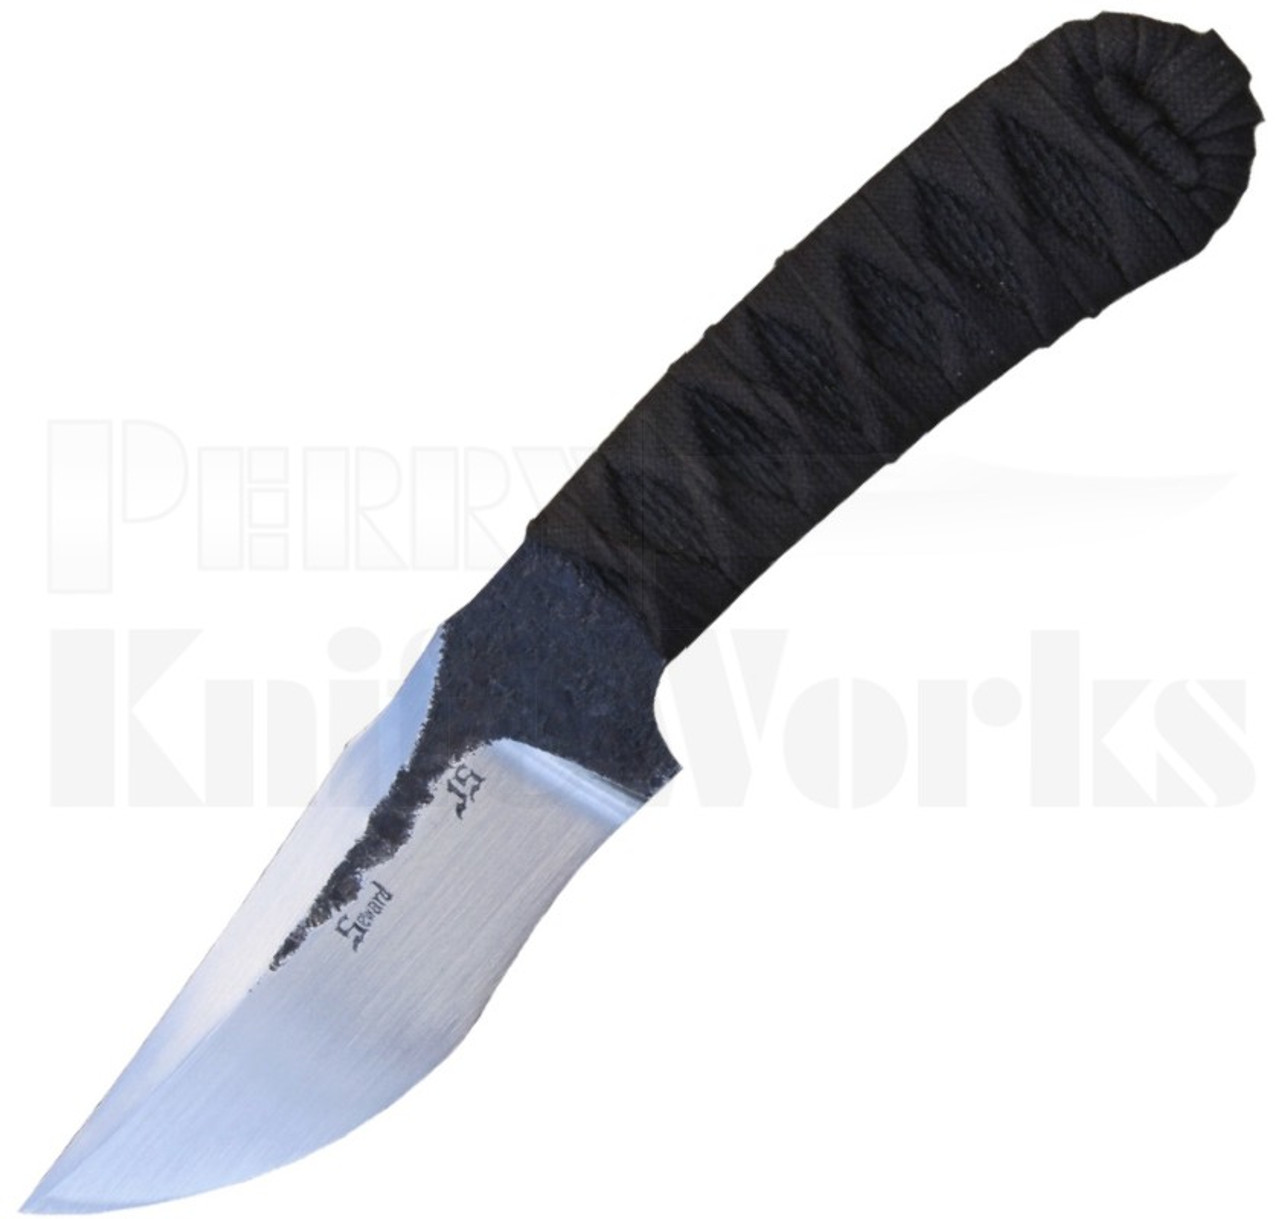 Ben Seward Vindicator Fixed Blade Knife Brown Wrapped l For Sale